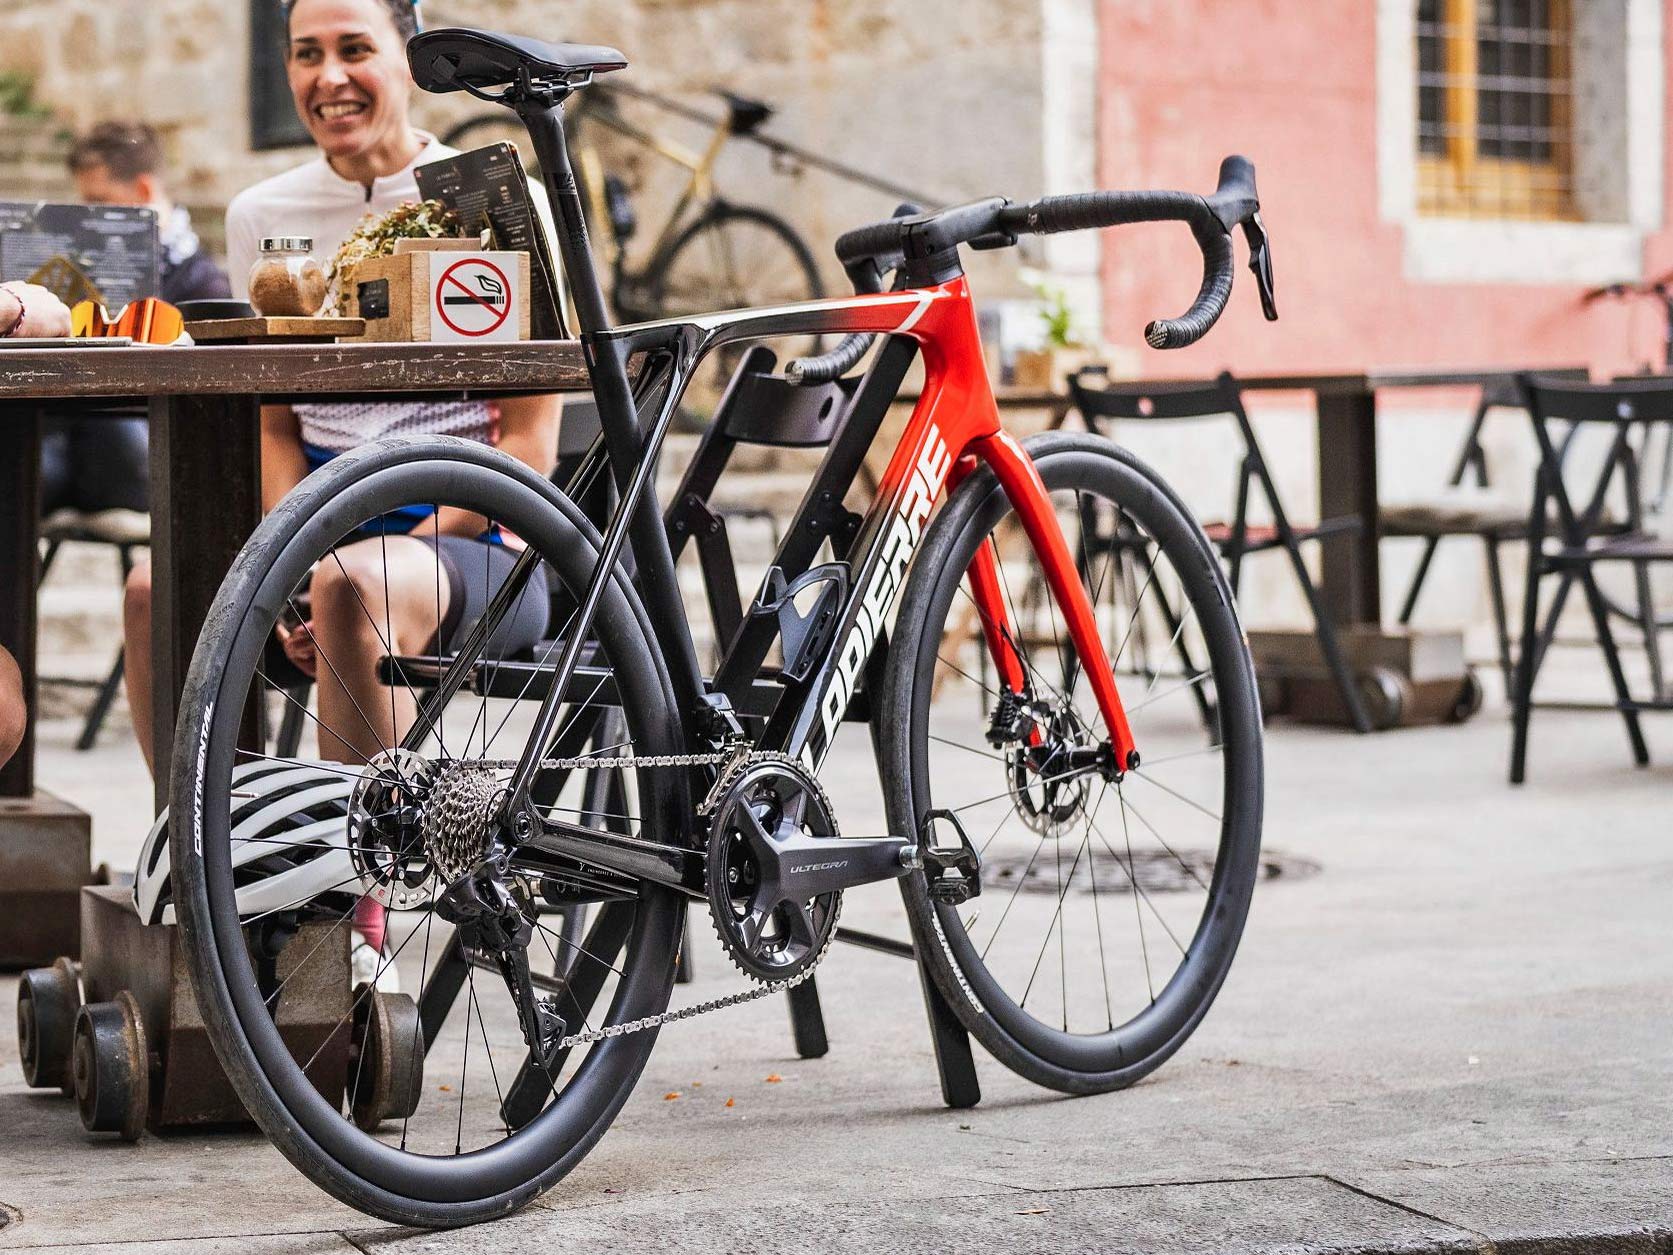 2022 Lapierre Xelius SL3 road bike, faster lighter more aero, cafe stop